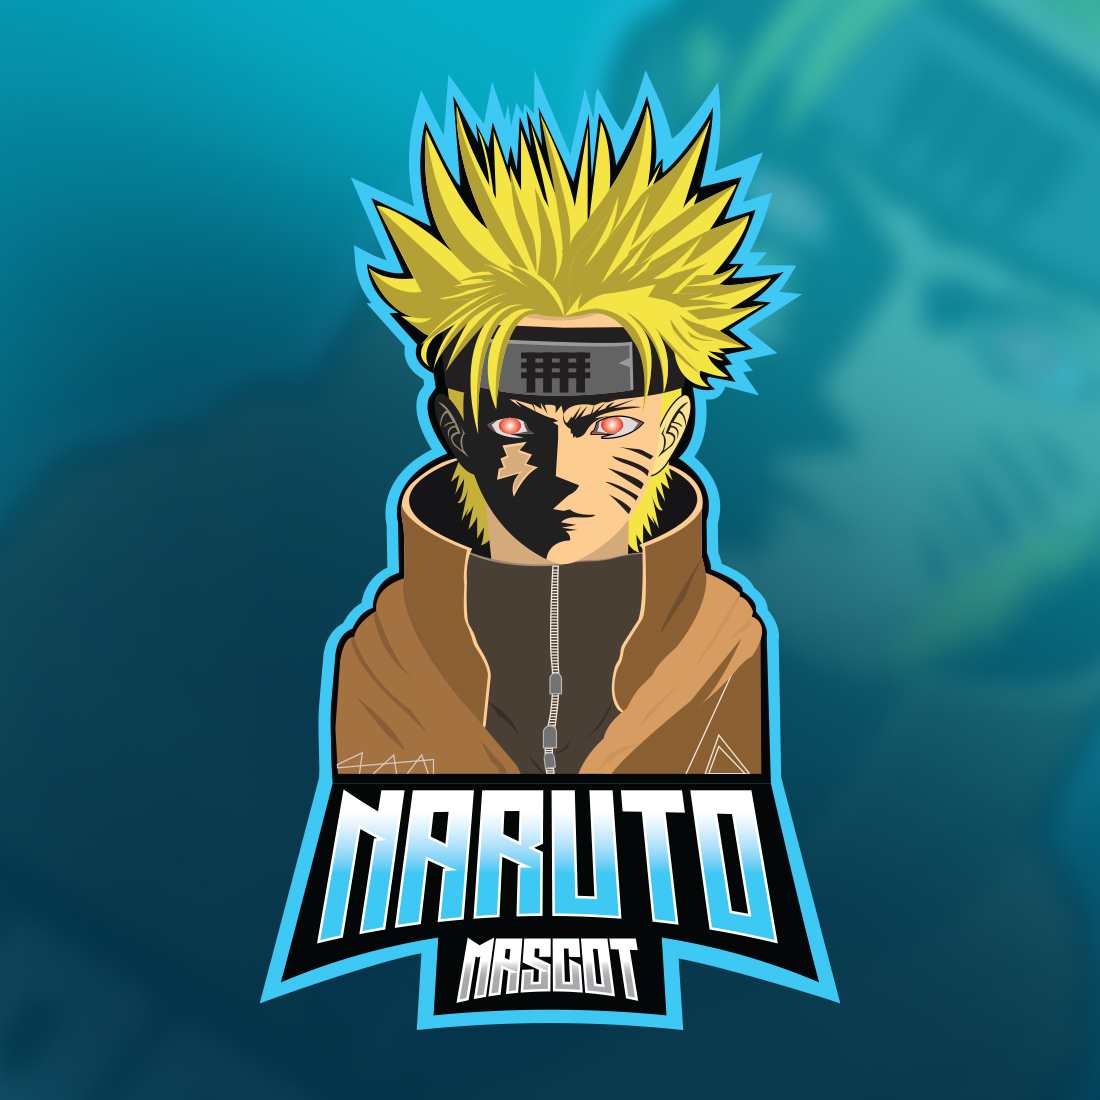 Naruto Mascot Logo Template cover image.